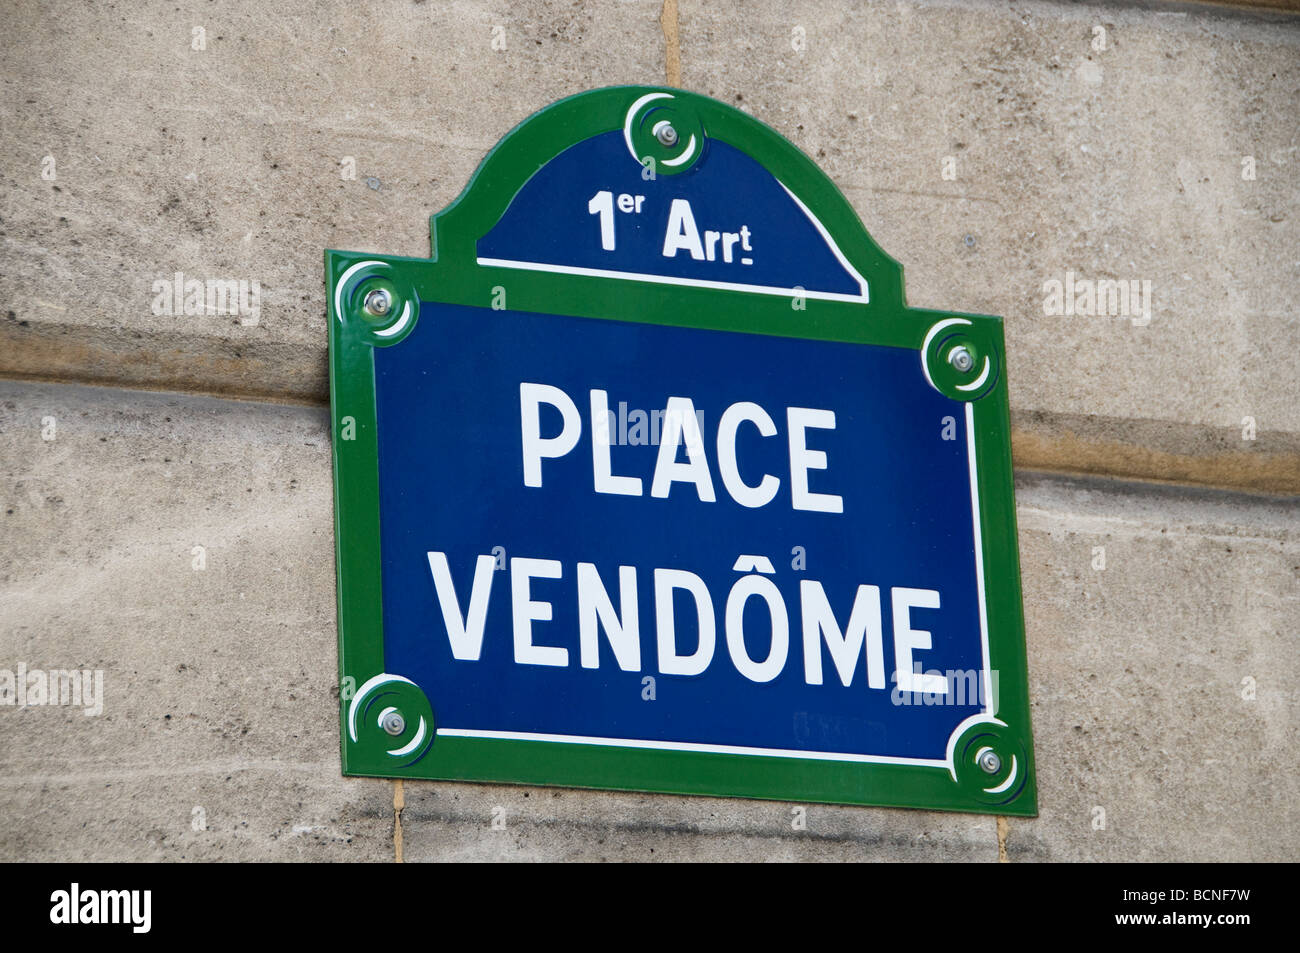 Place Vendome Paris Francia joyero parisino Foto de stock